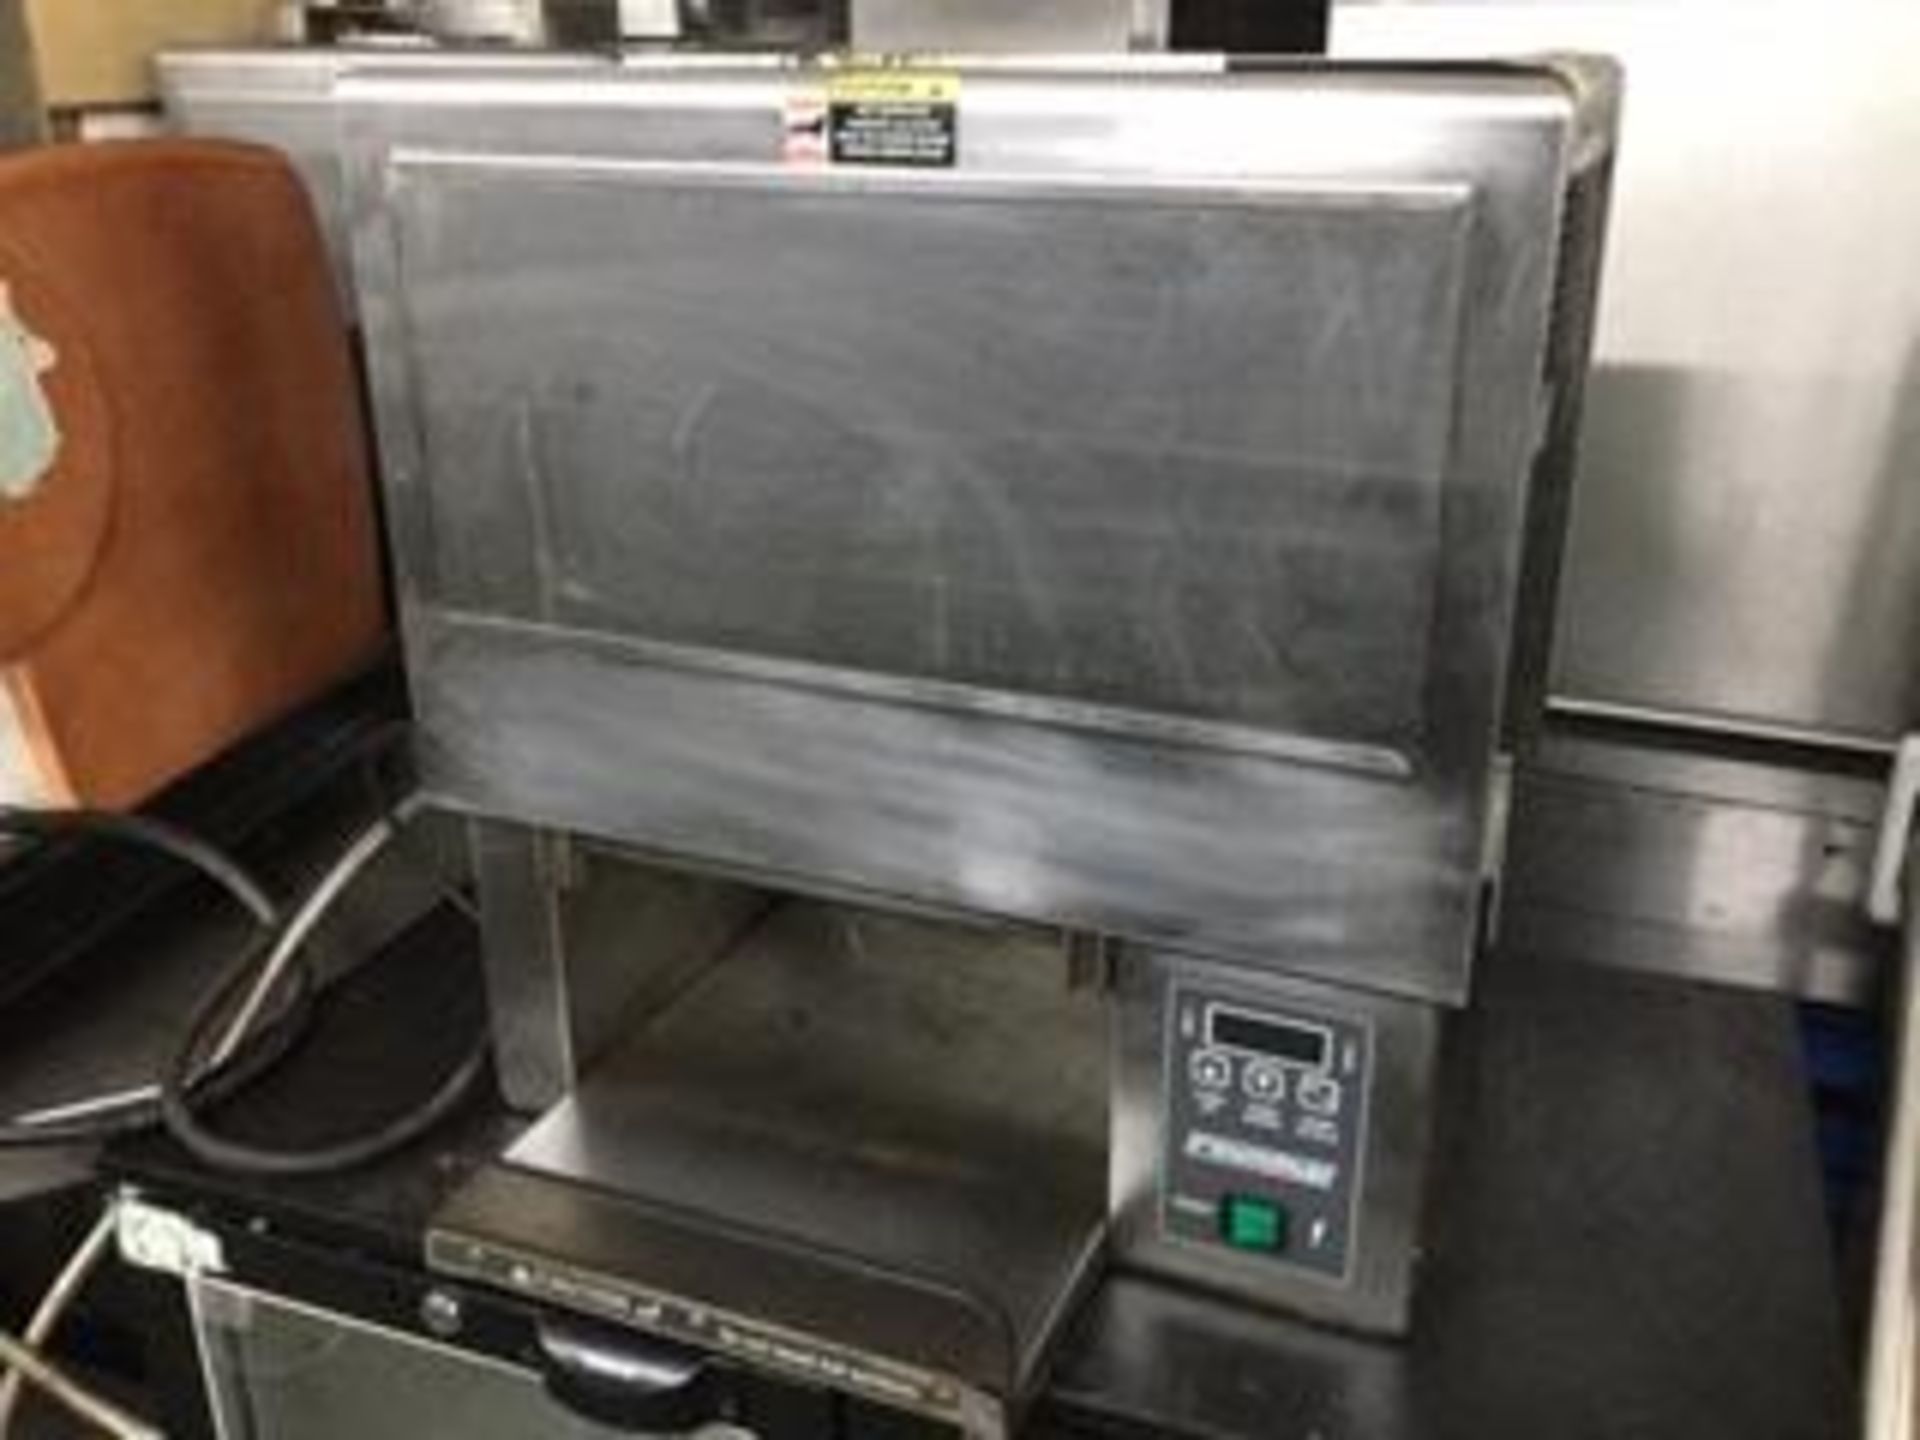 Round up Bun Conveyor Toaster – Digital – NO VAT - Image 2 of 2